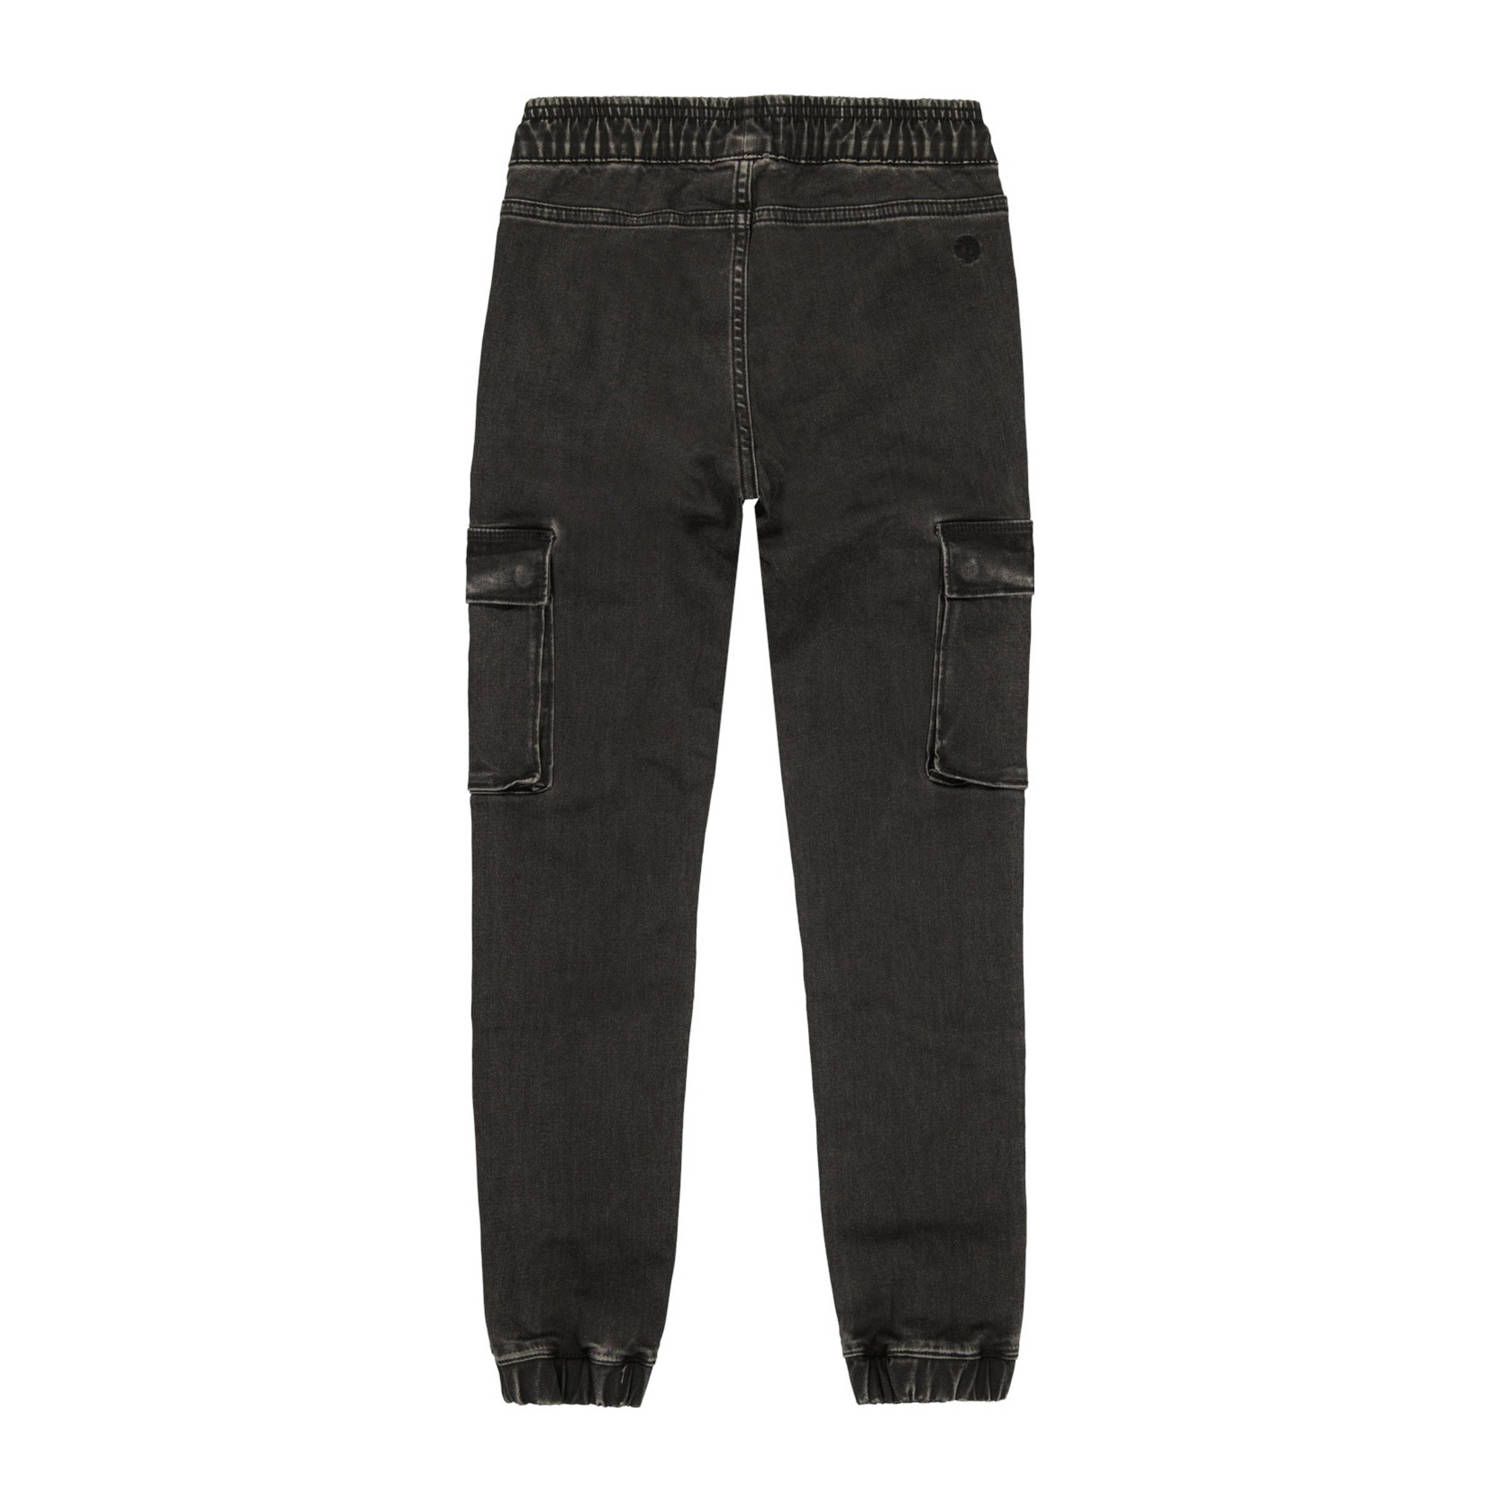 Raizzed slim fit jeans Shanghai black